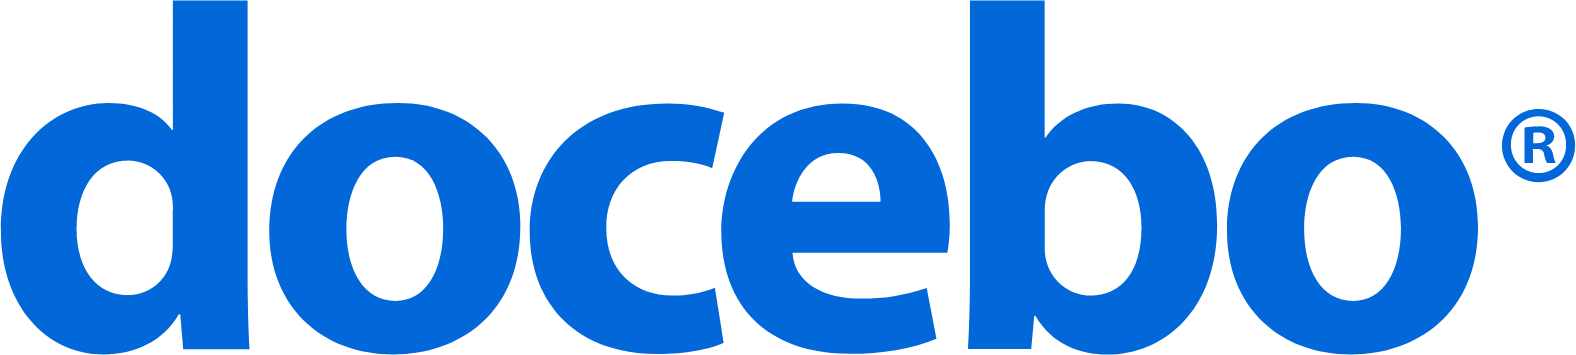 Docebo logo large (transparent PNG)